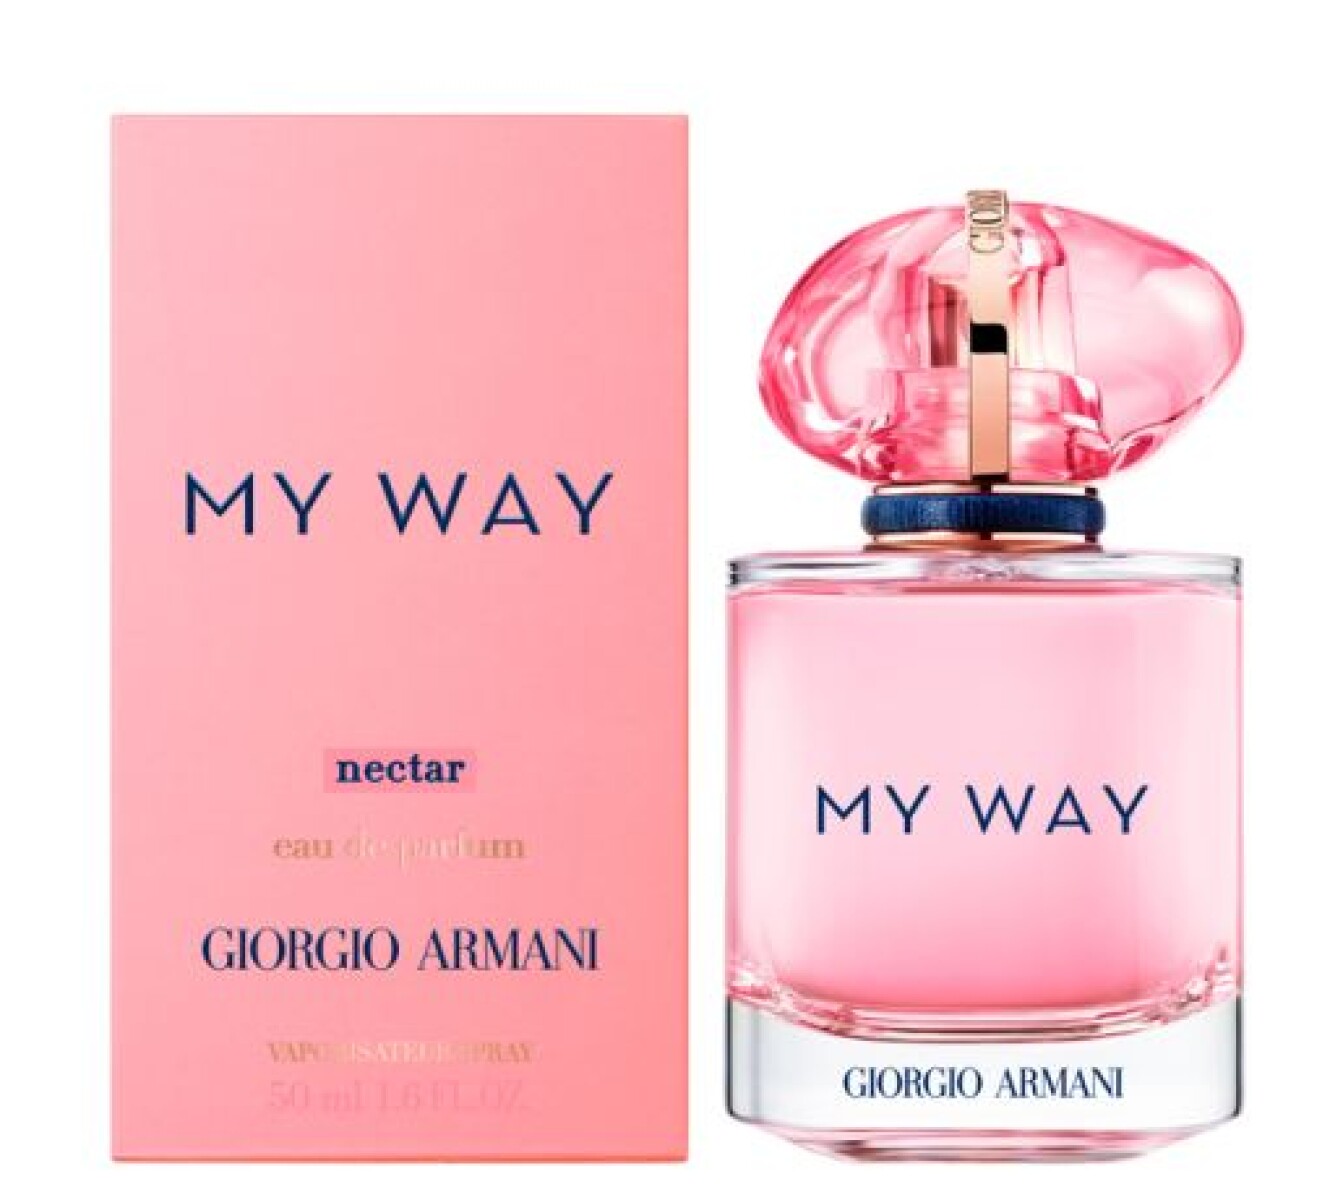 My Way nectar Giorgio Armani - 50 ml 